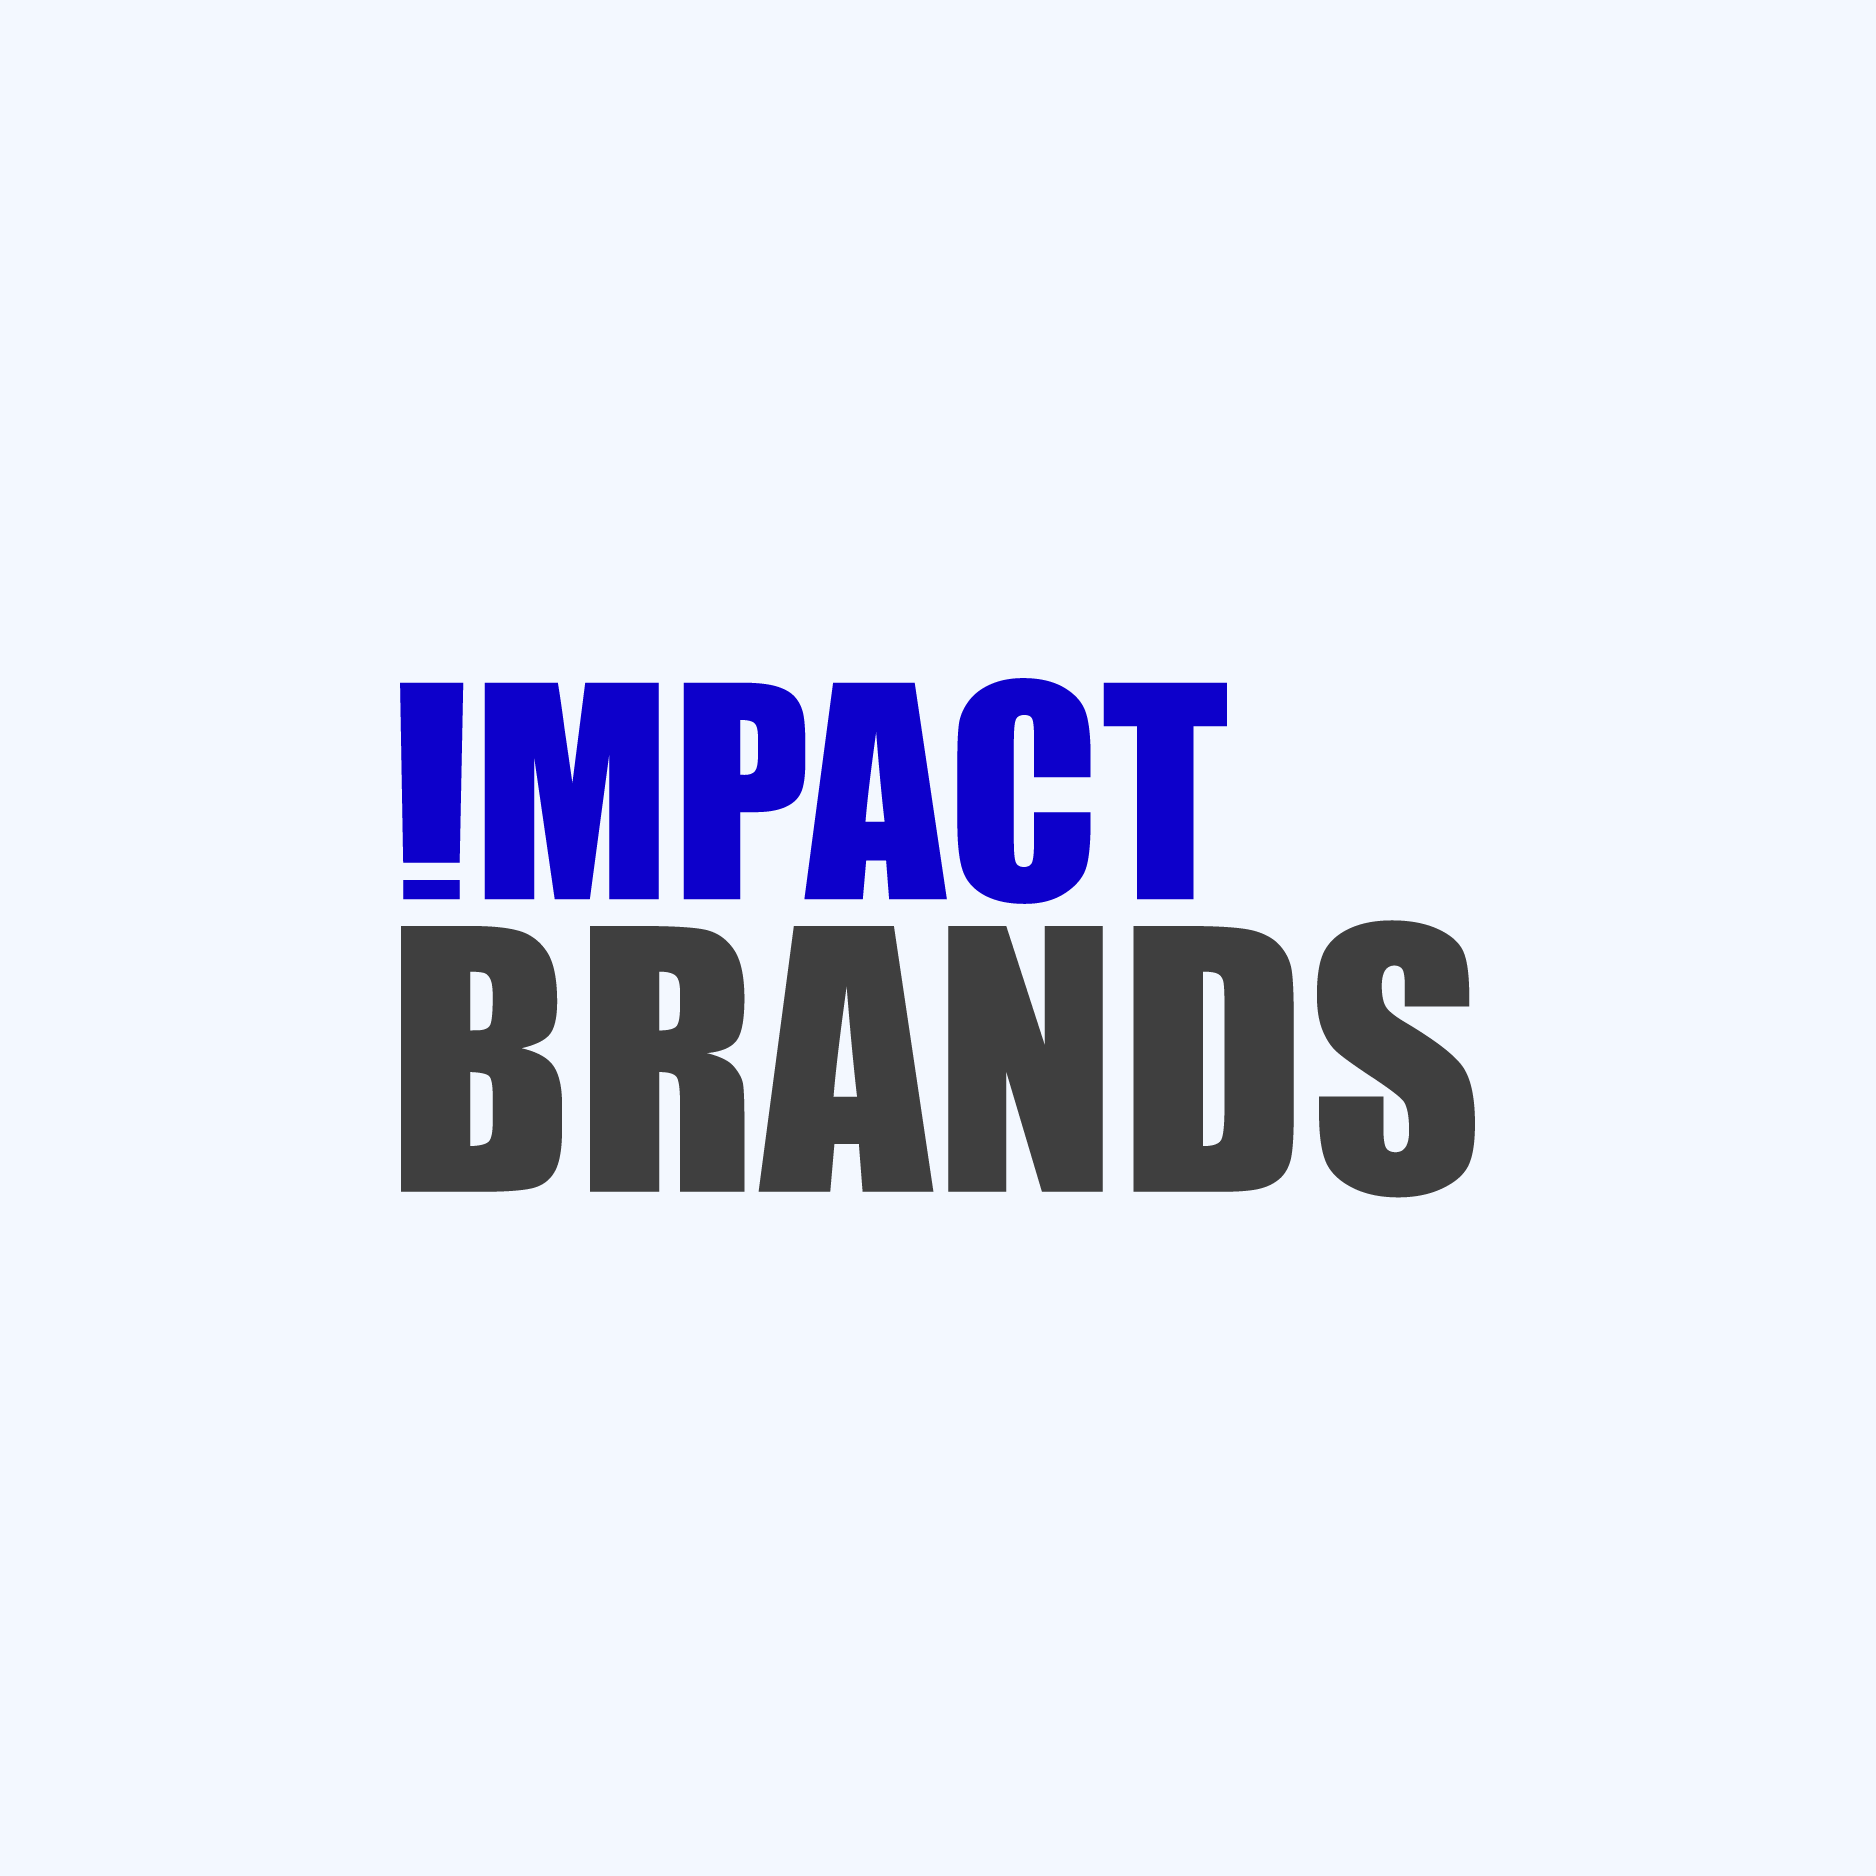 IMPACT BRANDS logo